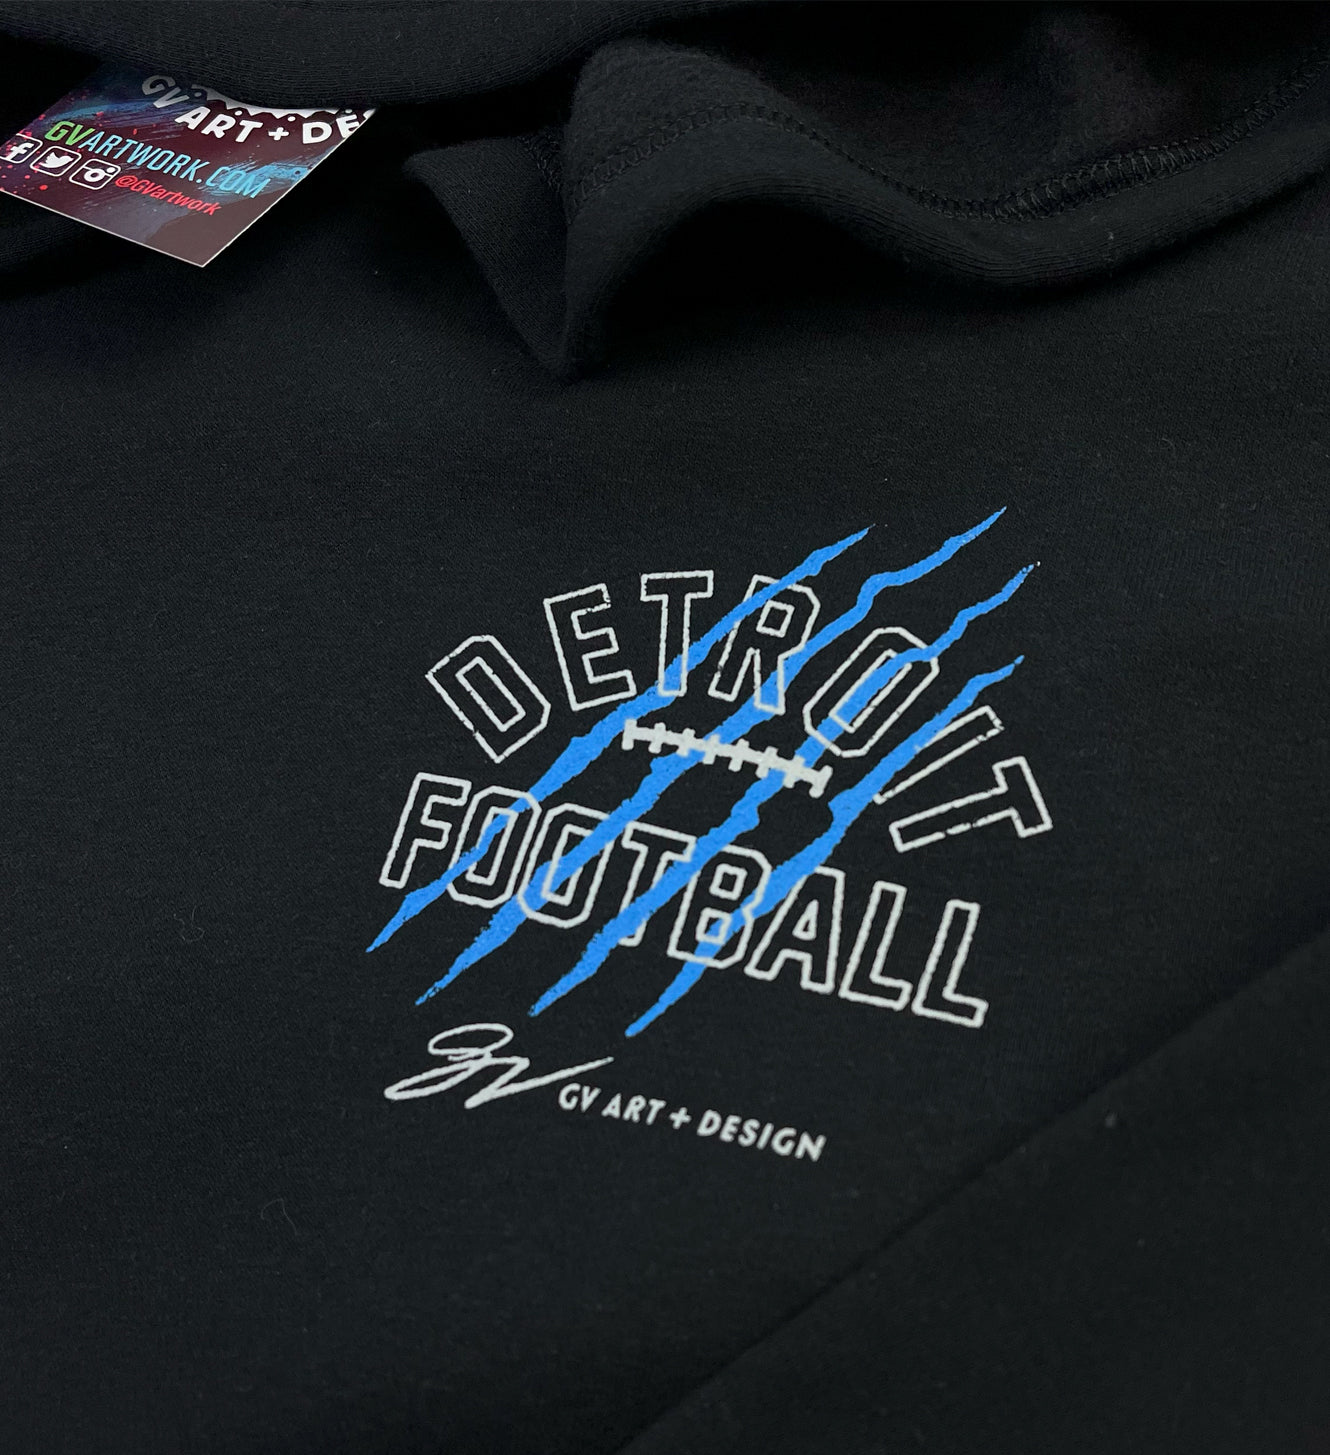 Detroit Football Mane Attraction Hooded Sweatshirt